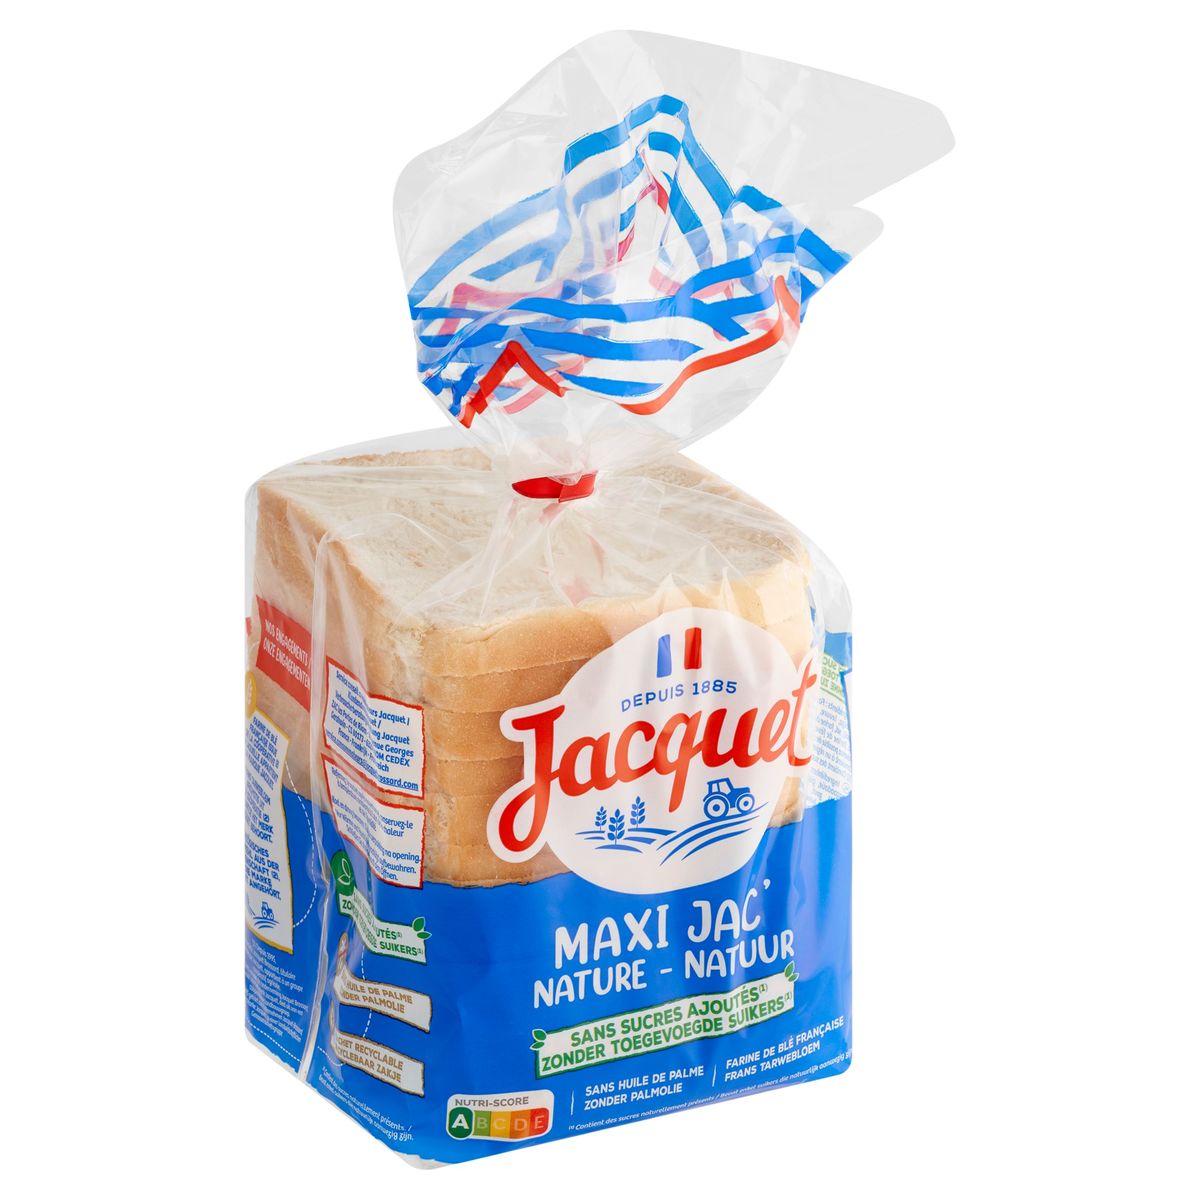 Jacquet Maxi Jac' Nature 550 g